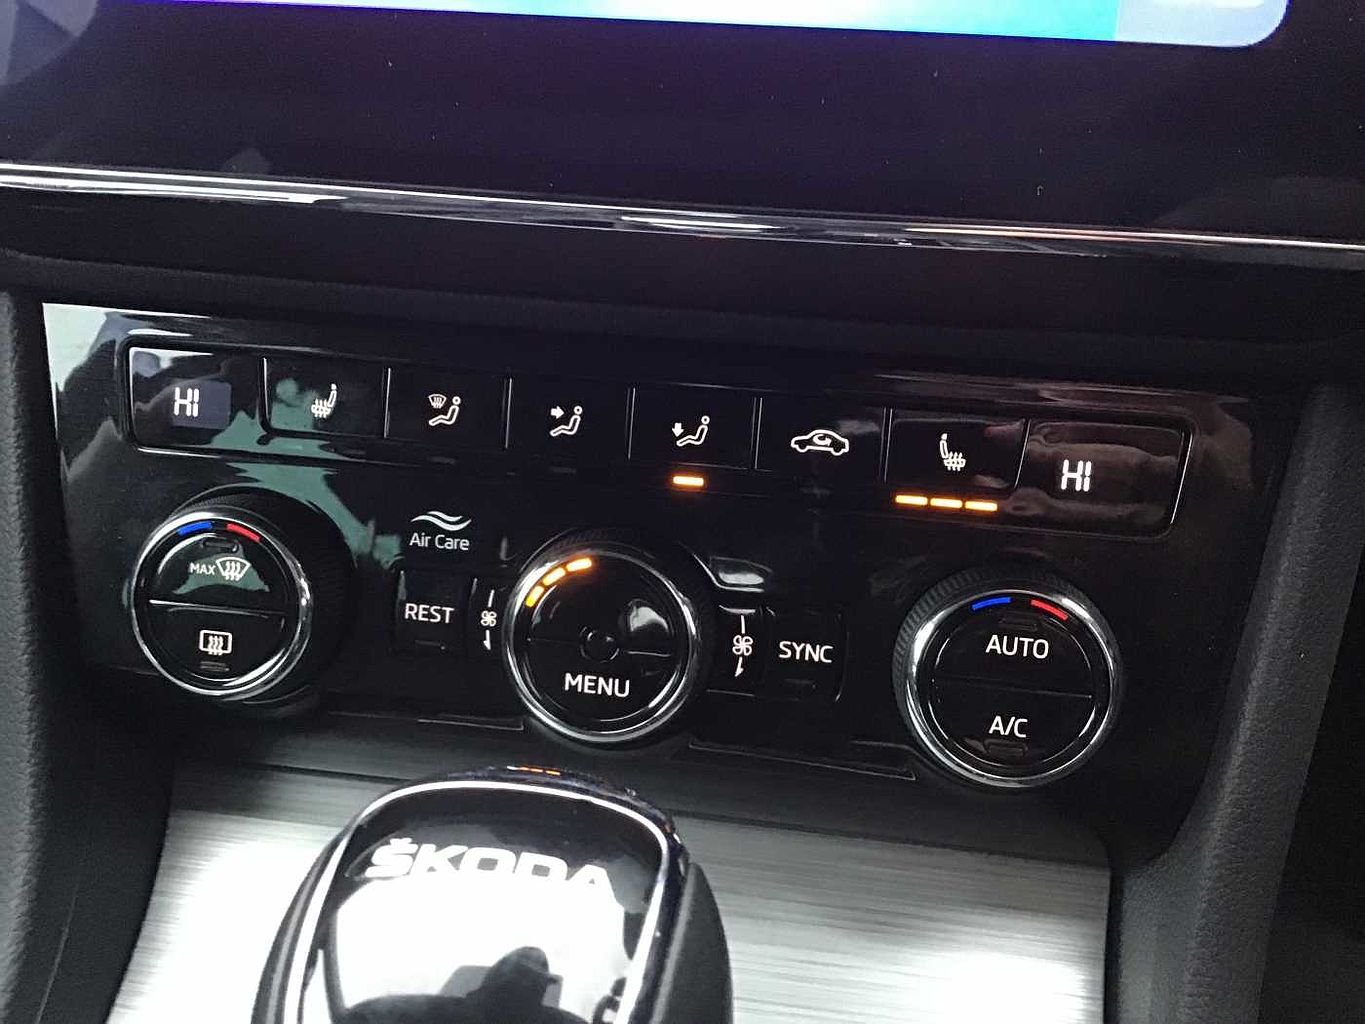 SKODA Superb 1.5 TSI (150ps) SE Technology Auto/DSG Hatchback